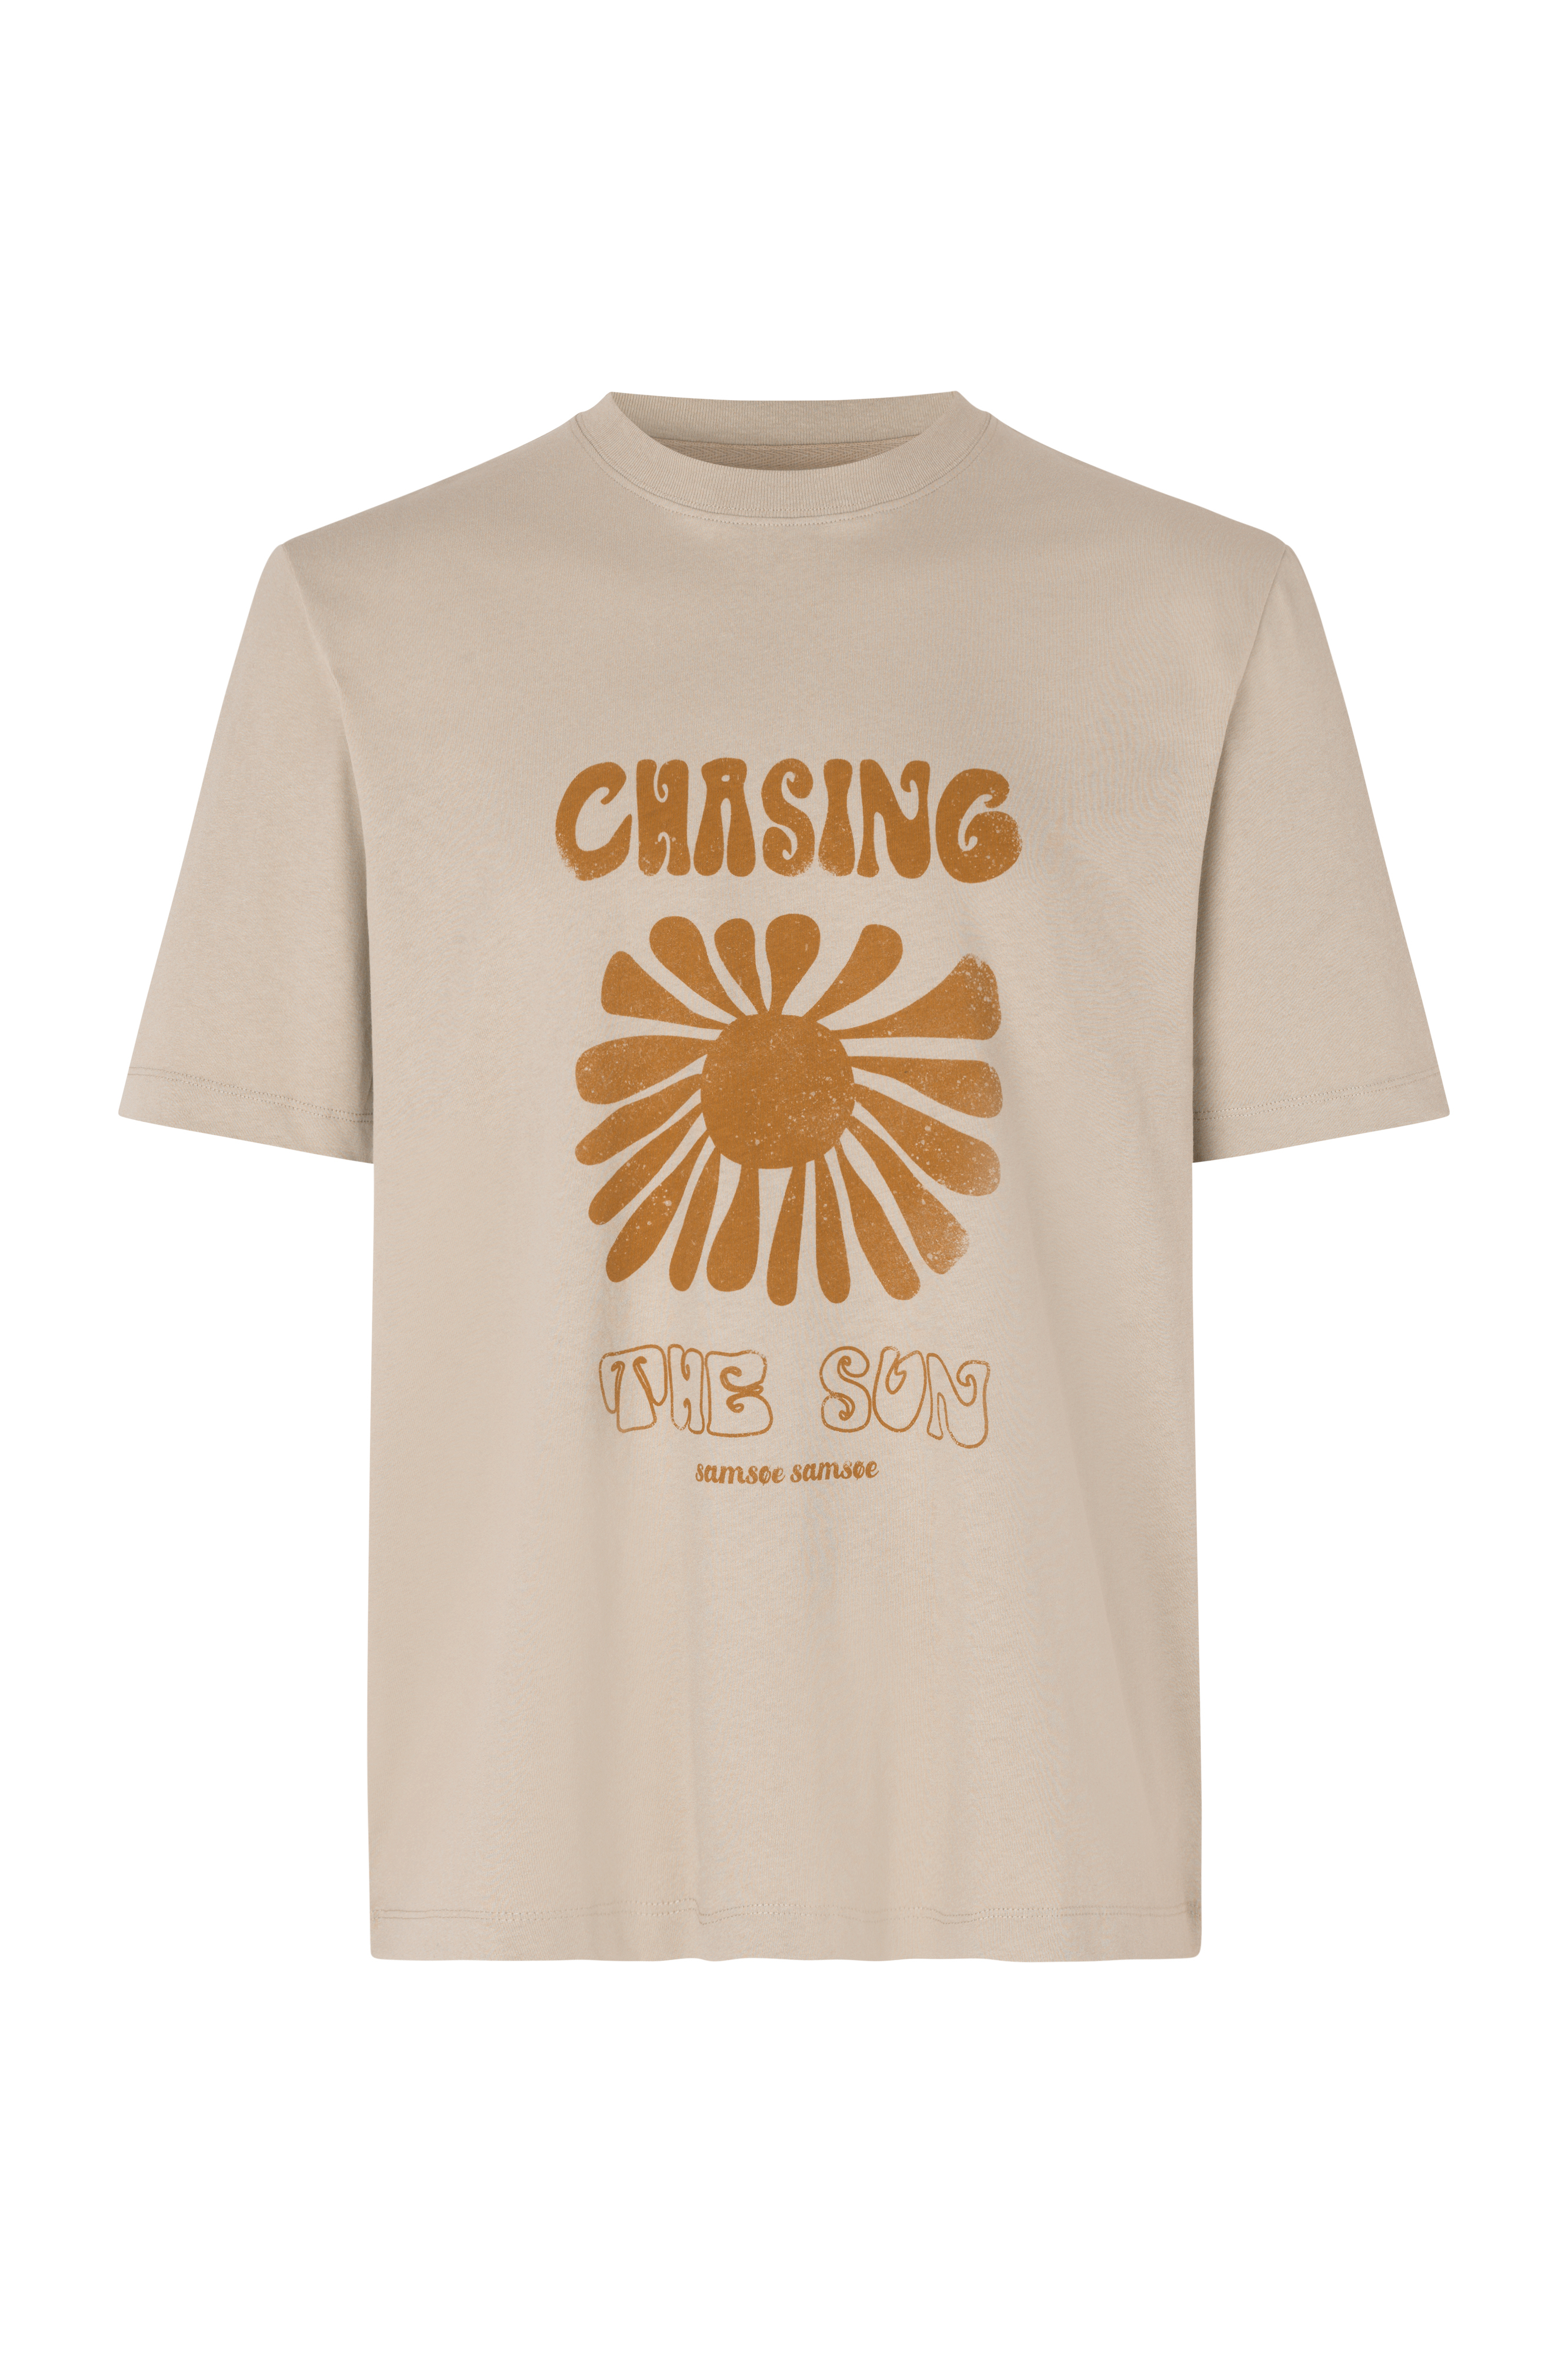 Chasing T-shirt